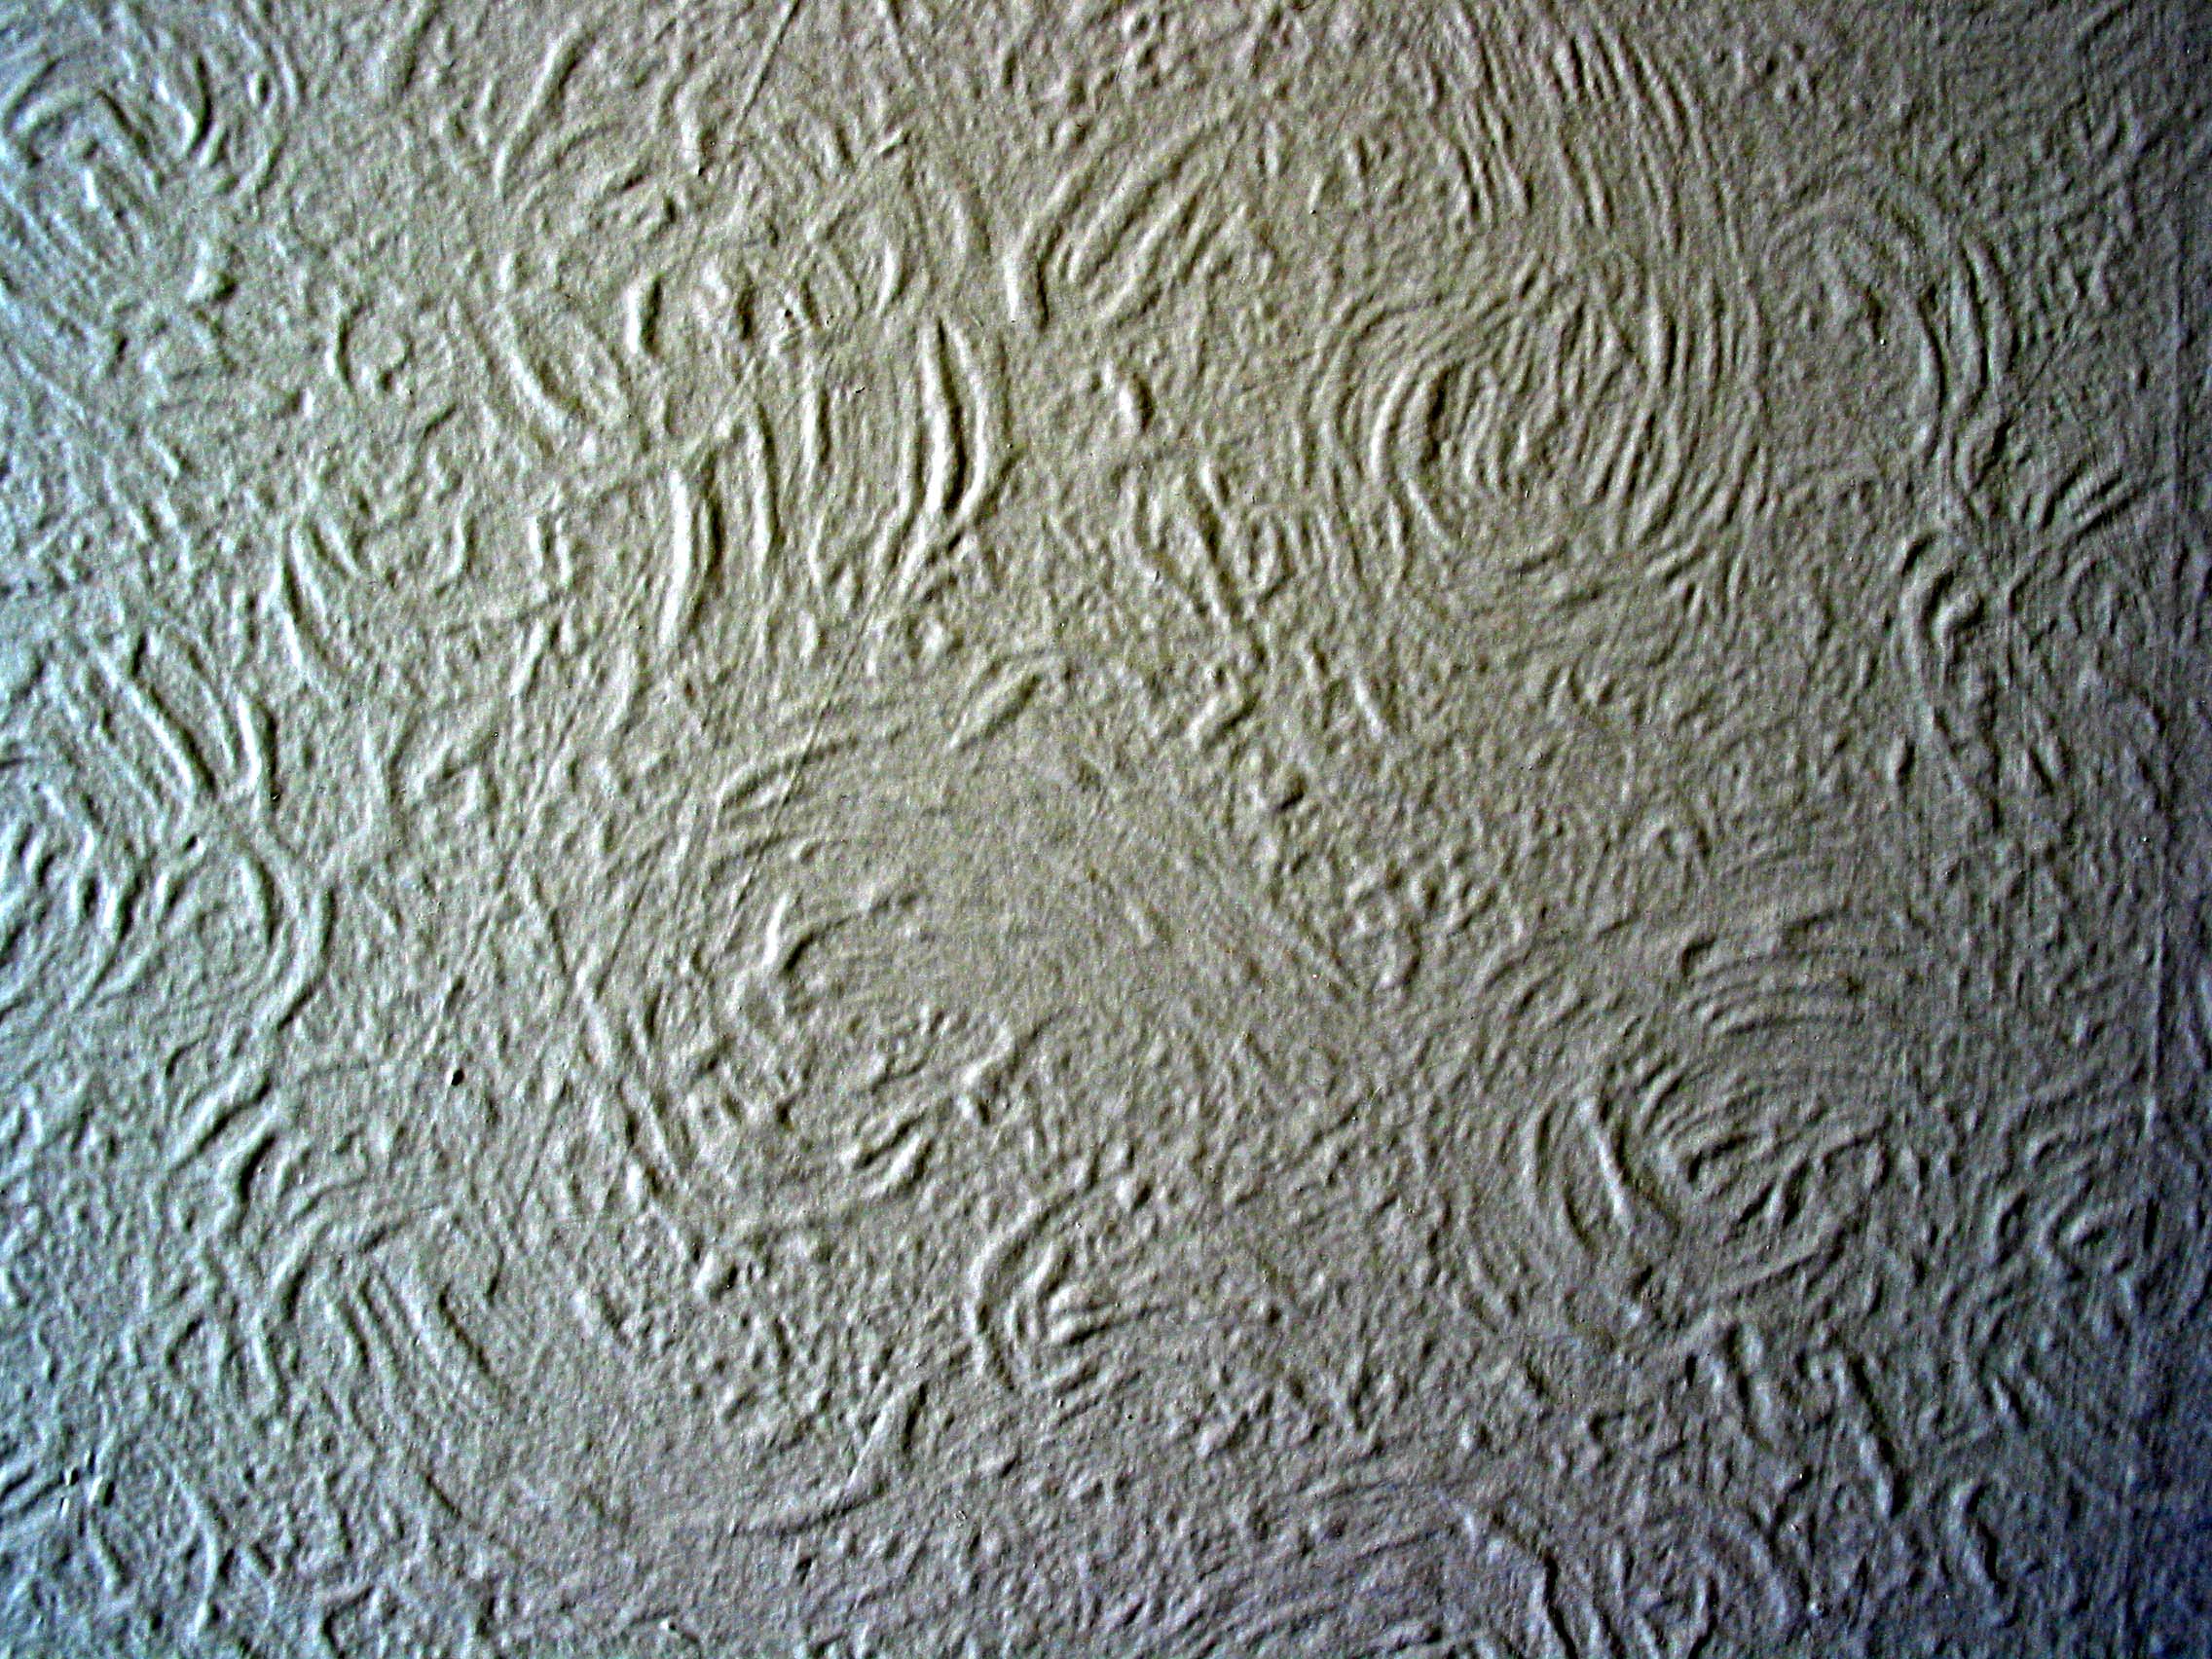 How to Wallpaper Textured Walls - MONICA BENAVIDEZ